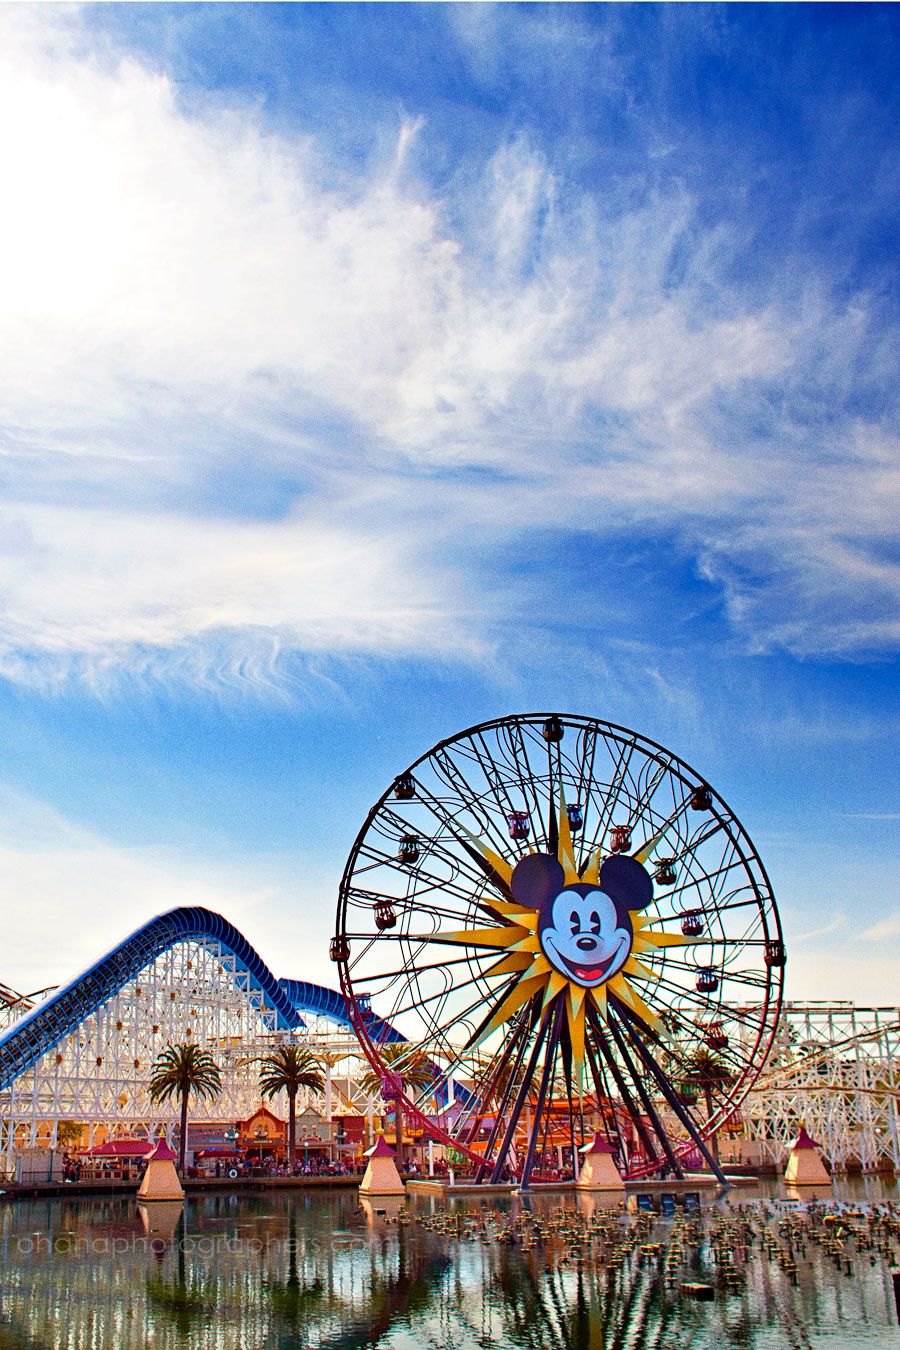 disneyland, california adventure only 2 more weeks till im there!:). Disneyland california adventure, Disneyland picture, Disneyland photography